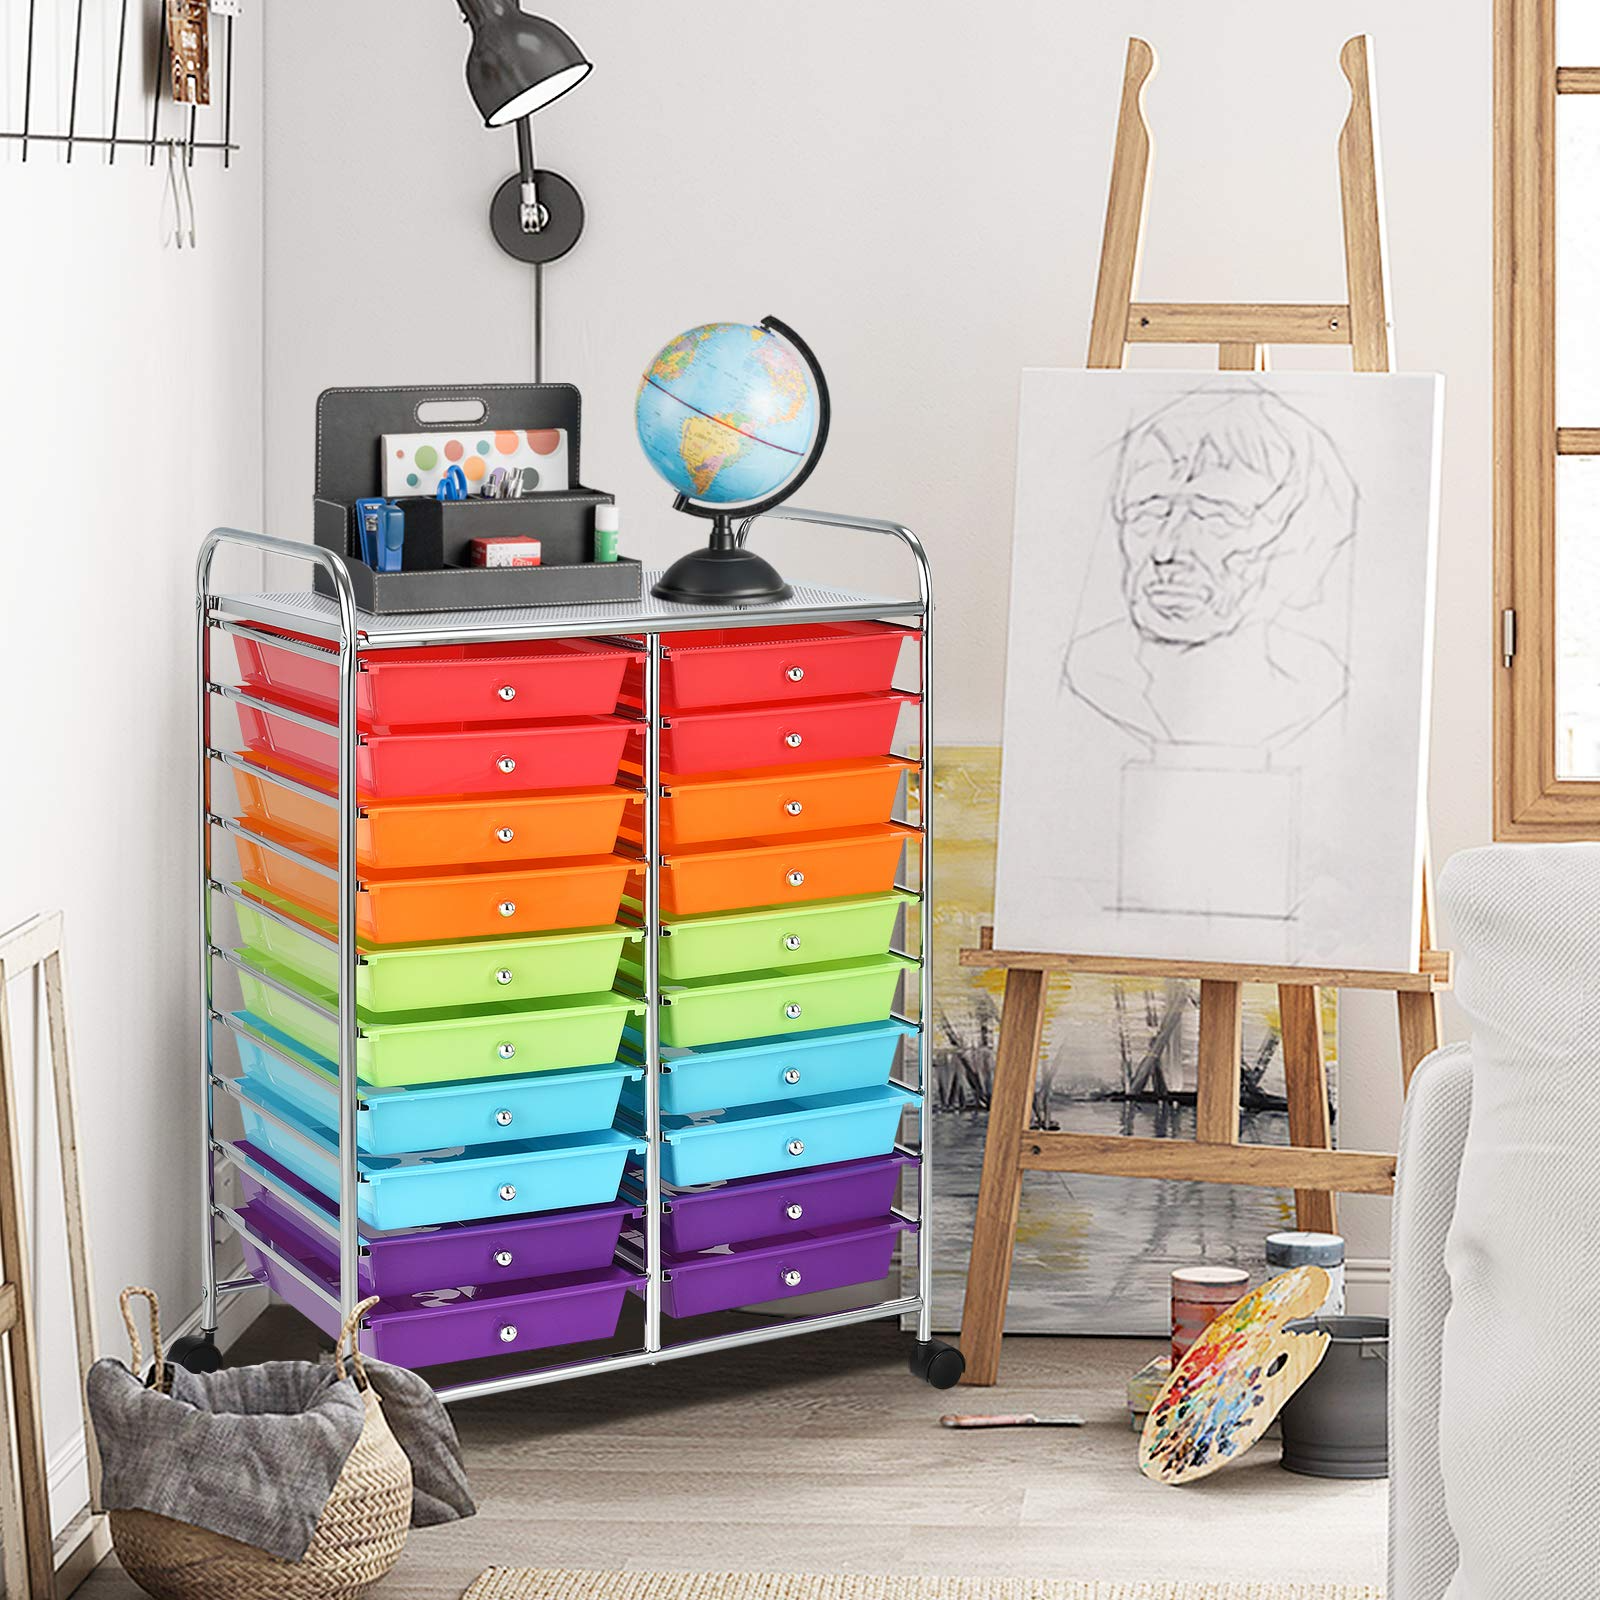 Giantexus Giantex Storage Drawer Carts, 20-Drawer Organizer, Utility Cart on Wheels, Multicolor2